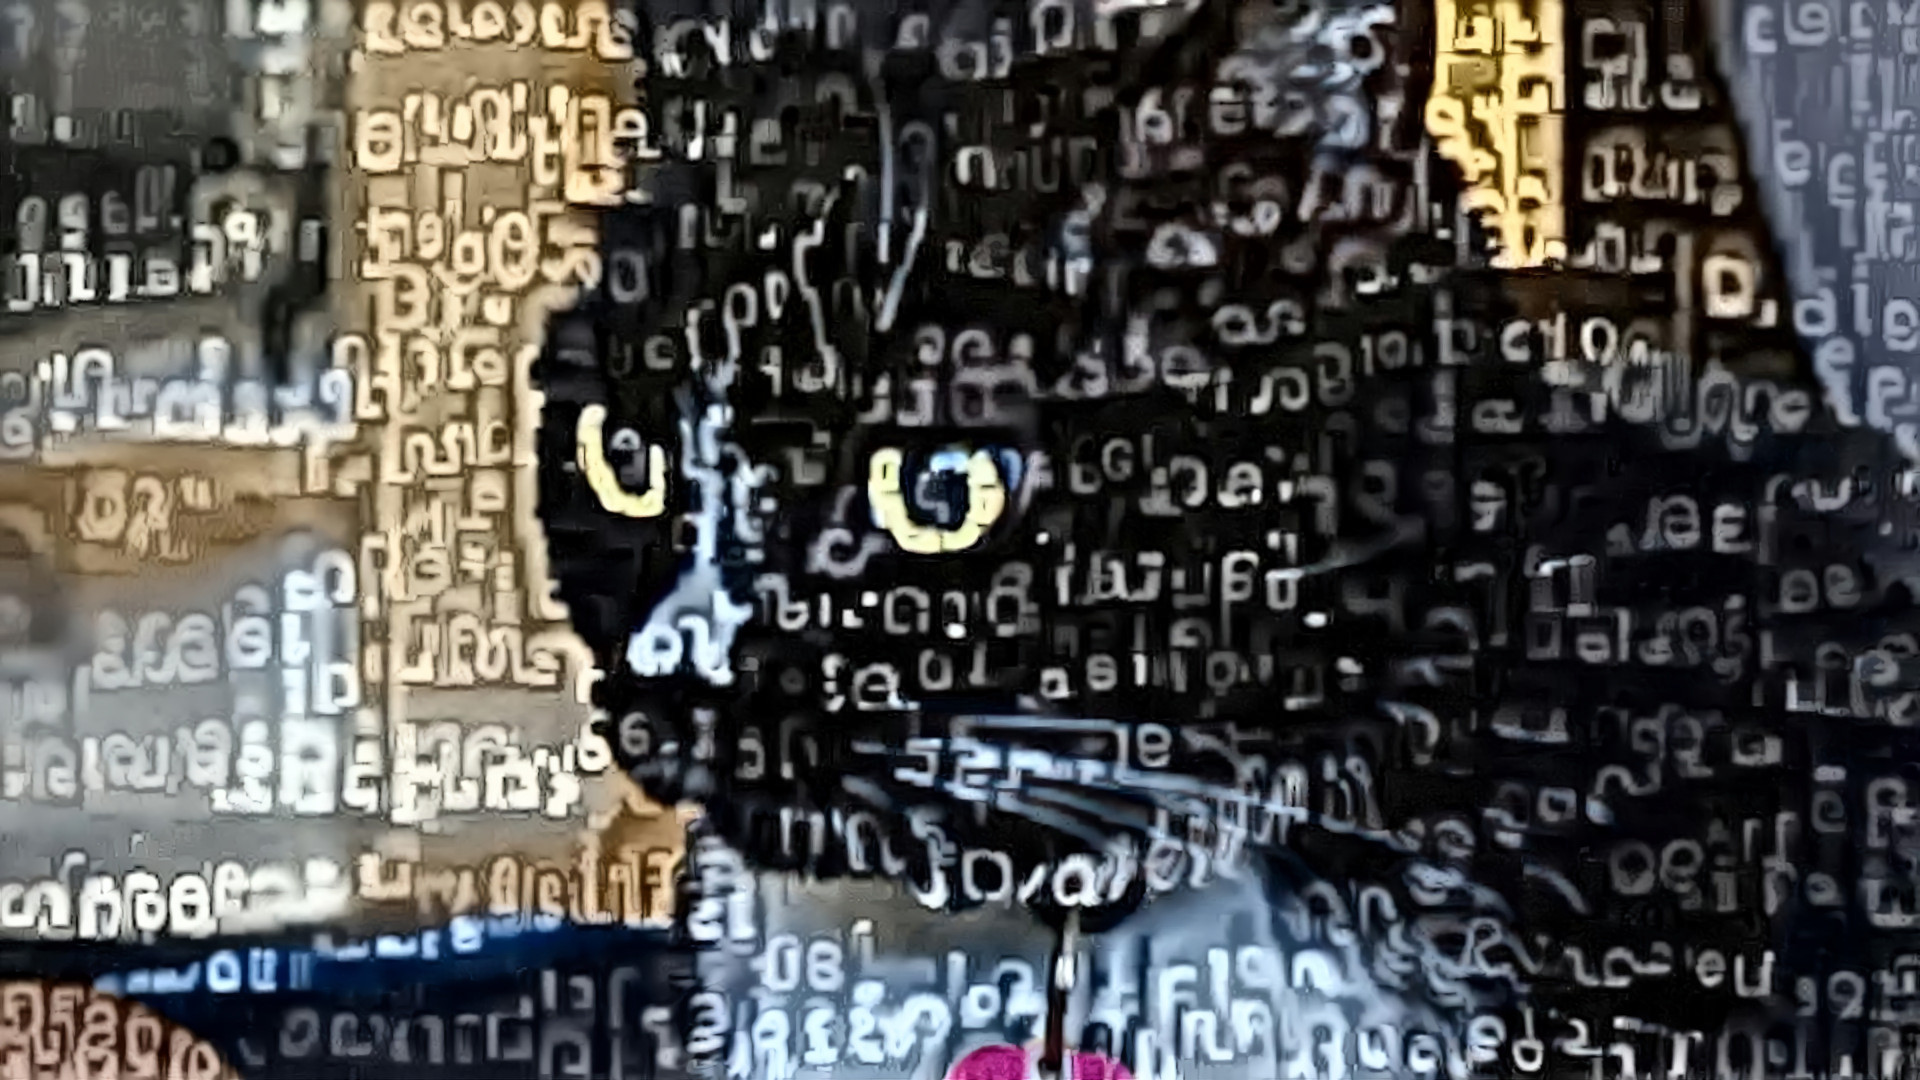 Coder the Tuxedo cat